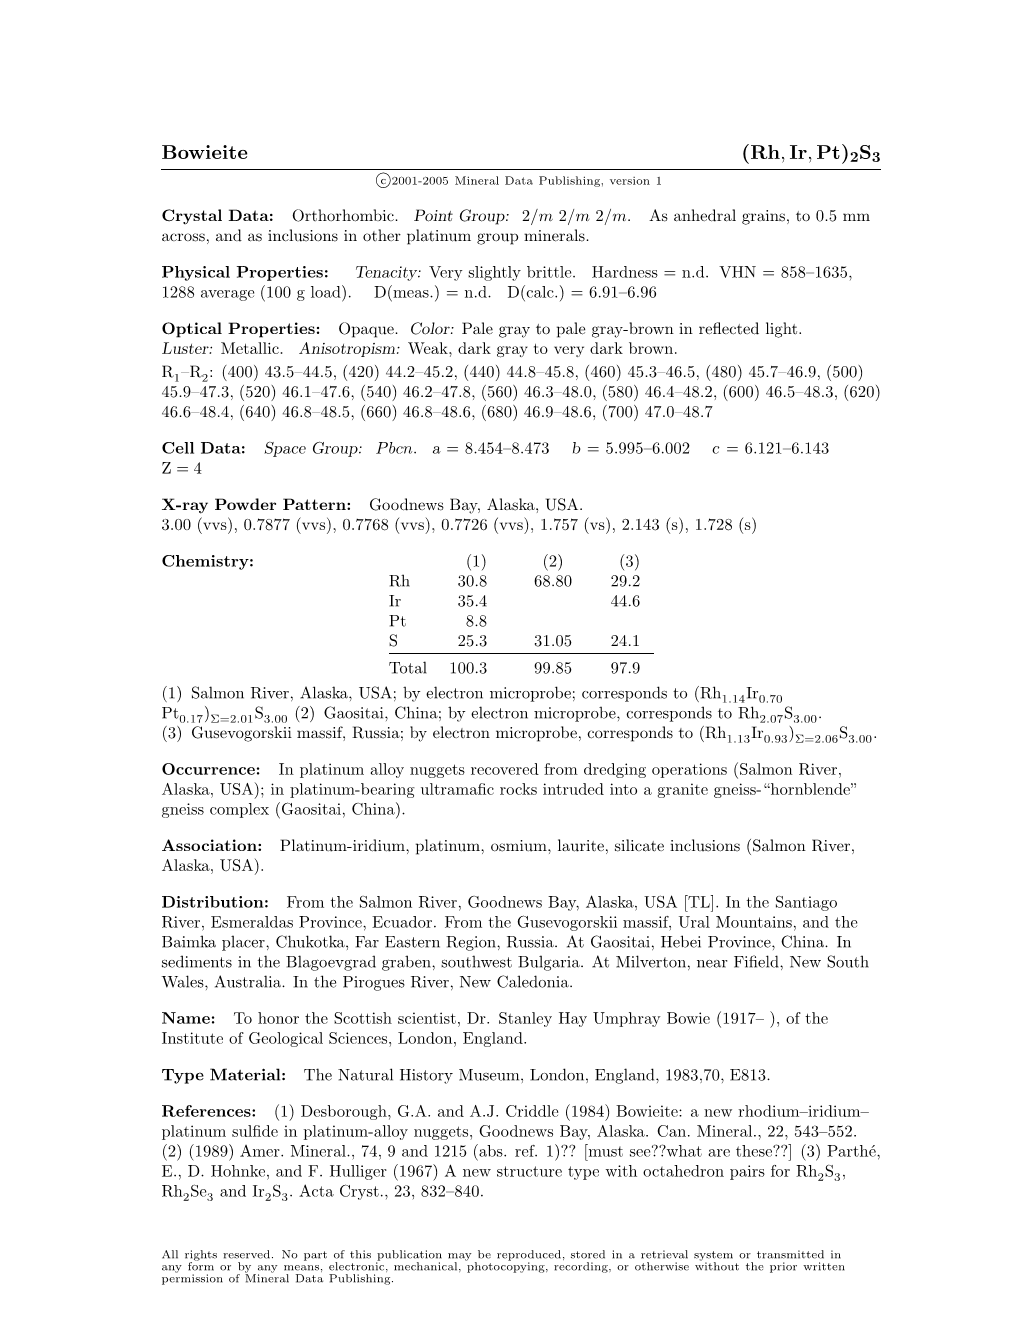 Bowieite (Rh, Ir, Pt)2S3 C 2001-2005 Mineral Data Publishing, Version 1